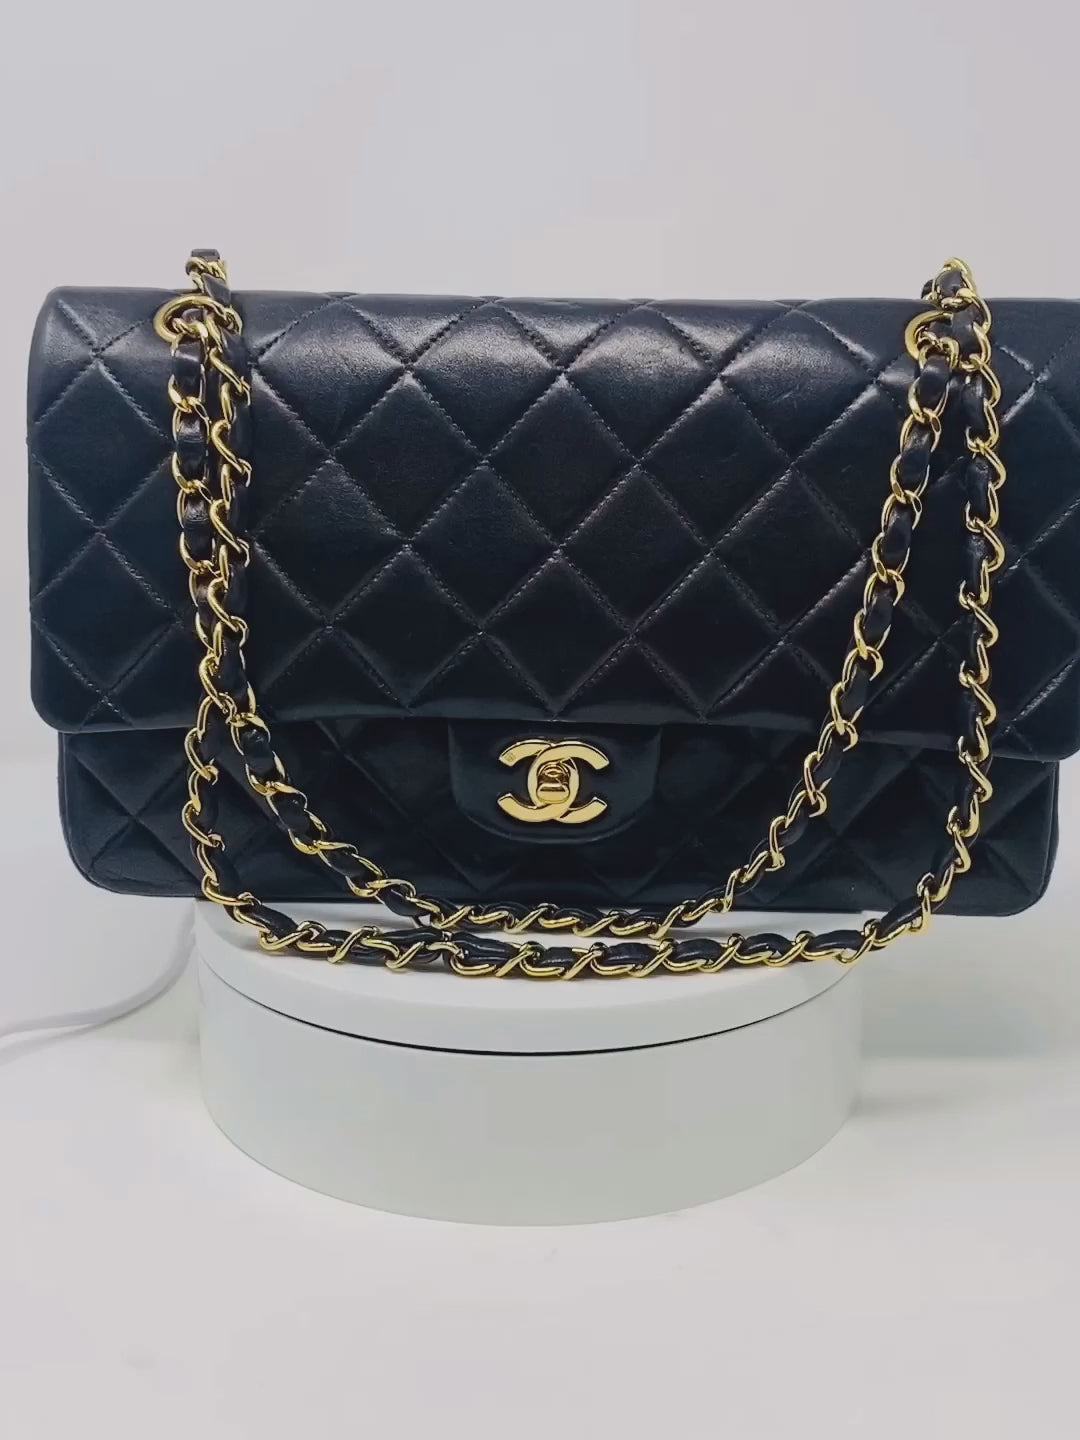 Chanel timeless bag